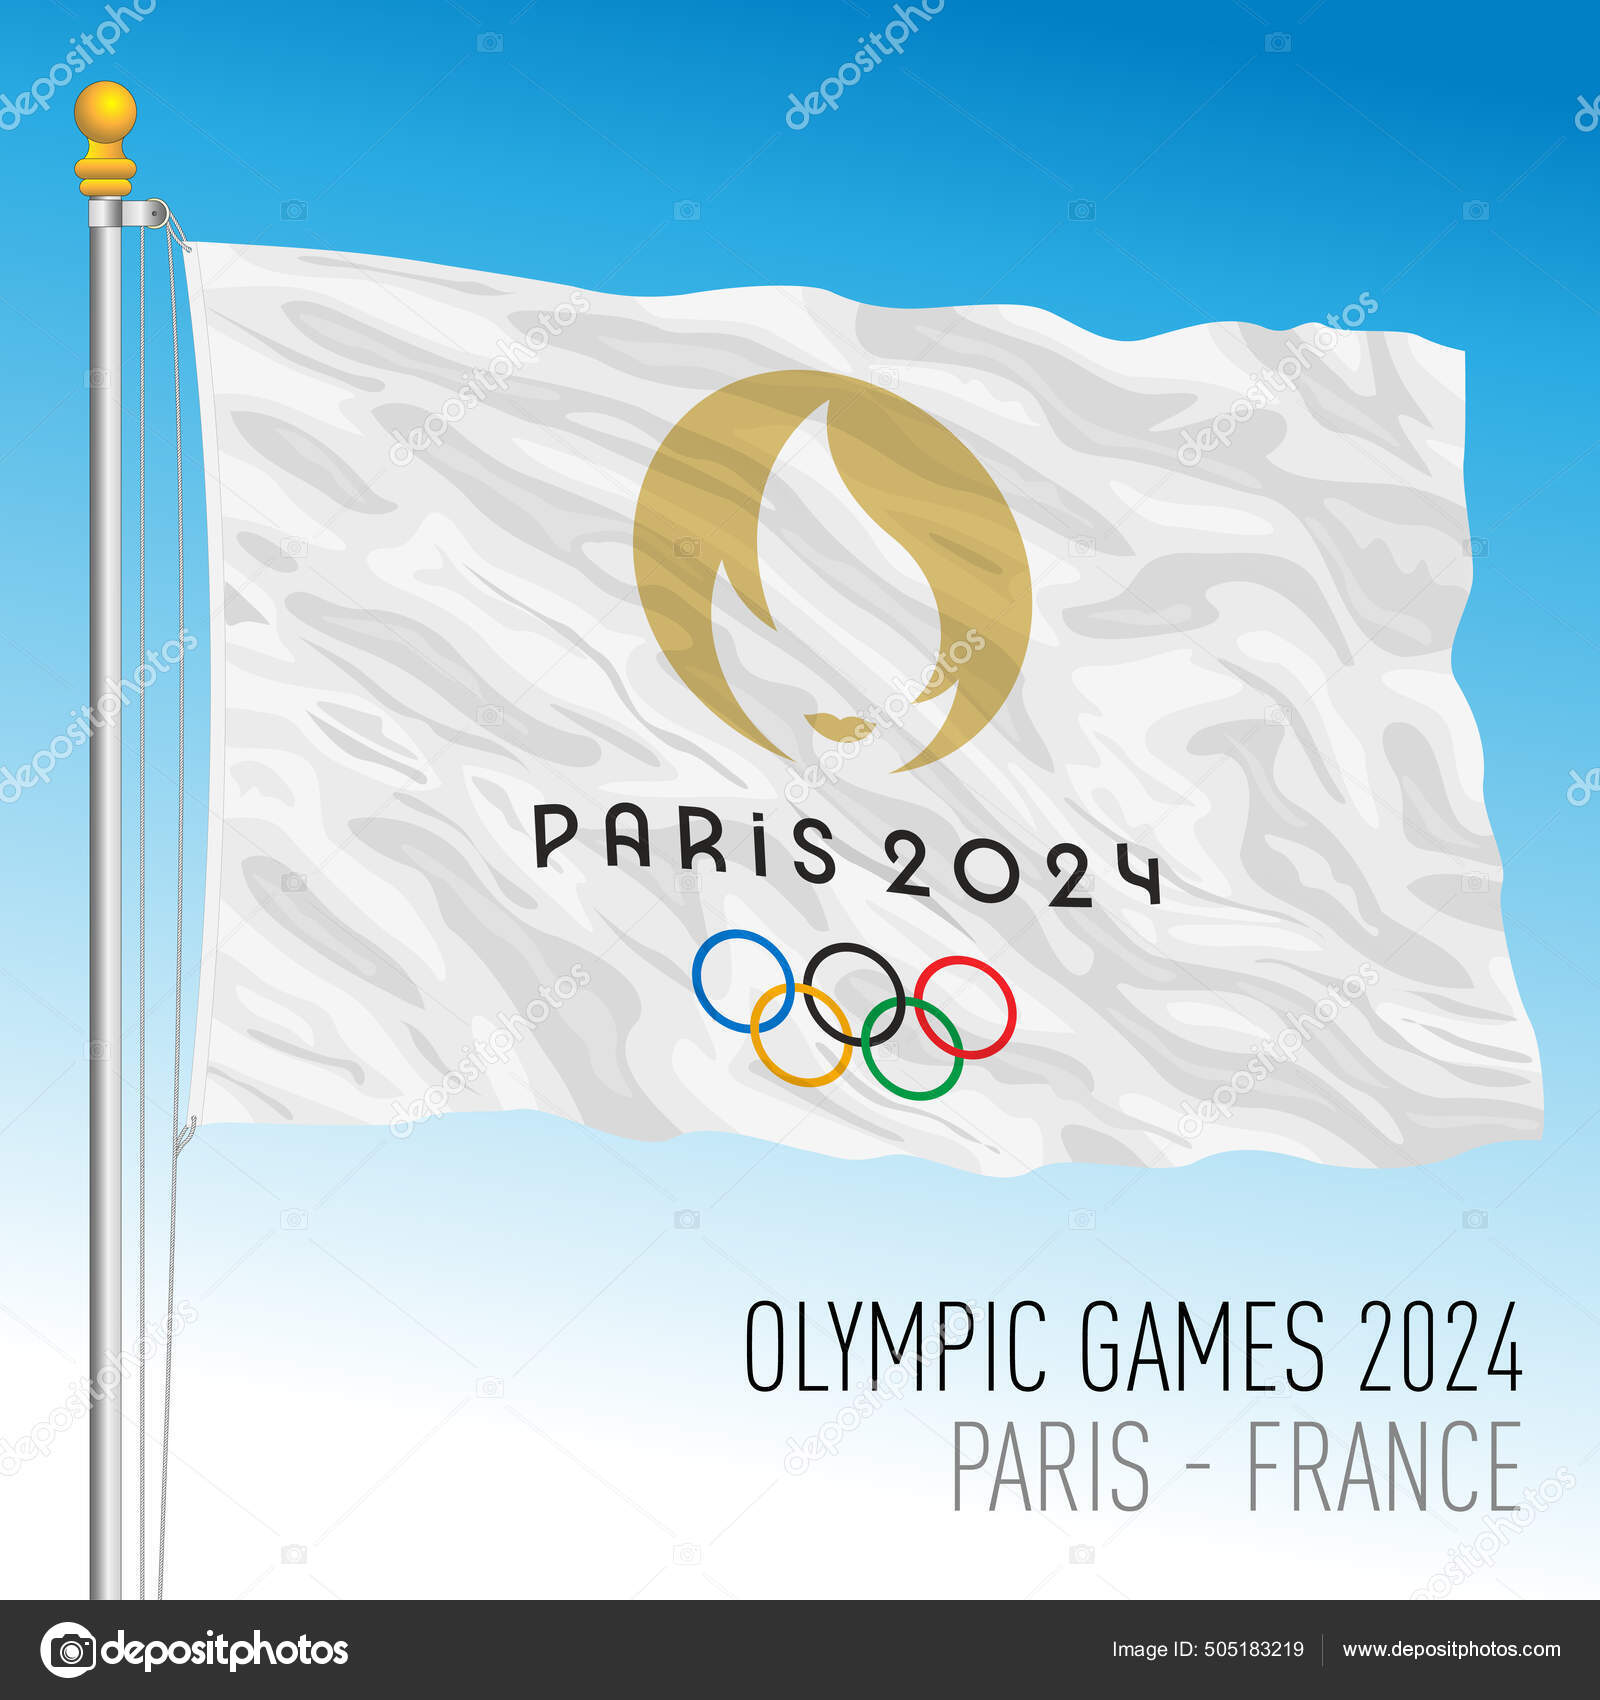 https://st2.depositphotos.com/2304119/50518/v/1600/depositphotos_505183219-stock-illustration-paris-france-year-2024-flag.jpg